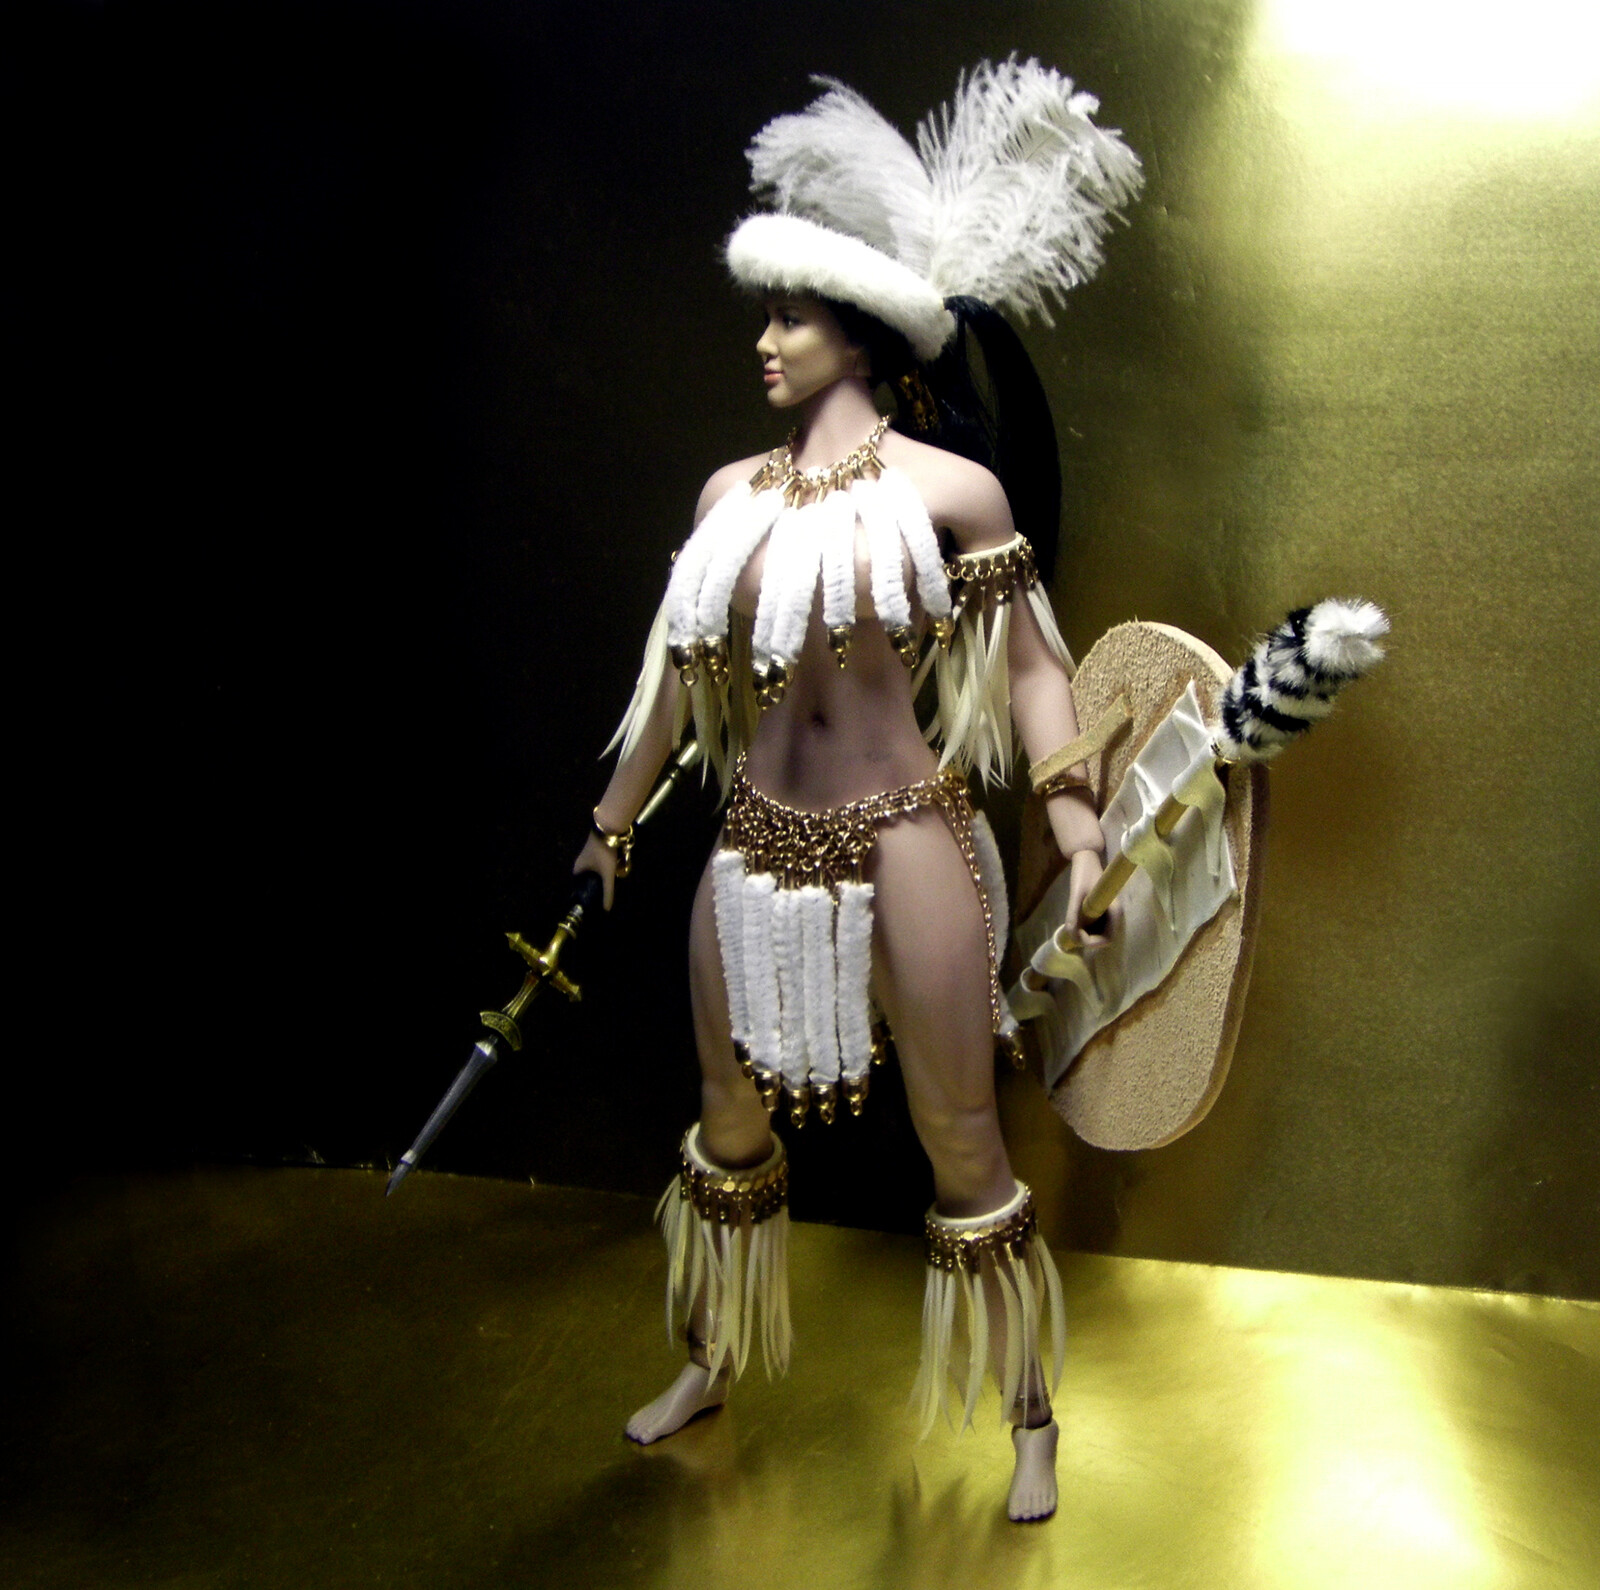 DOLL IN ARMOR - TBLeague Phicen doll in a Zulu costume